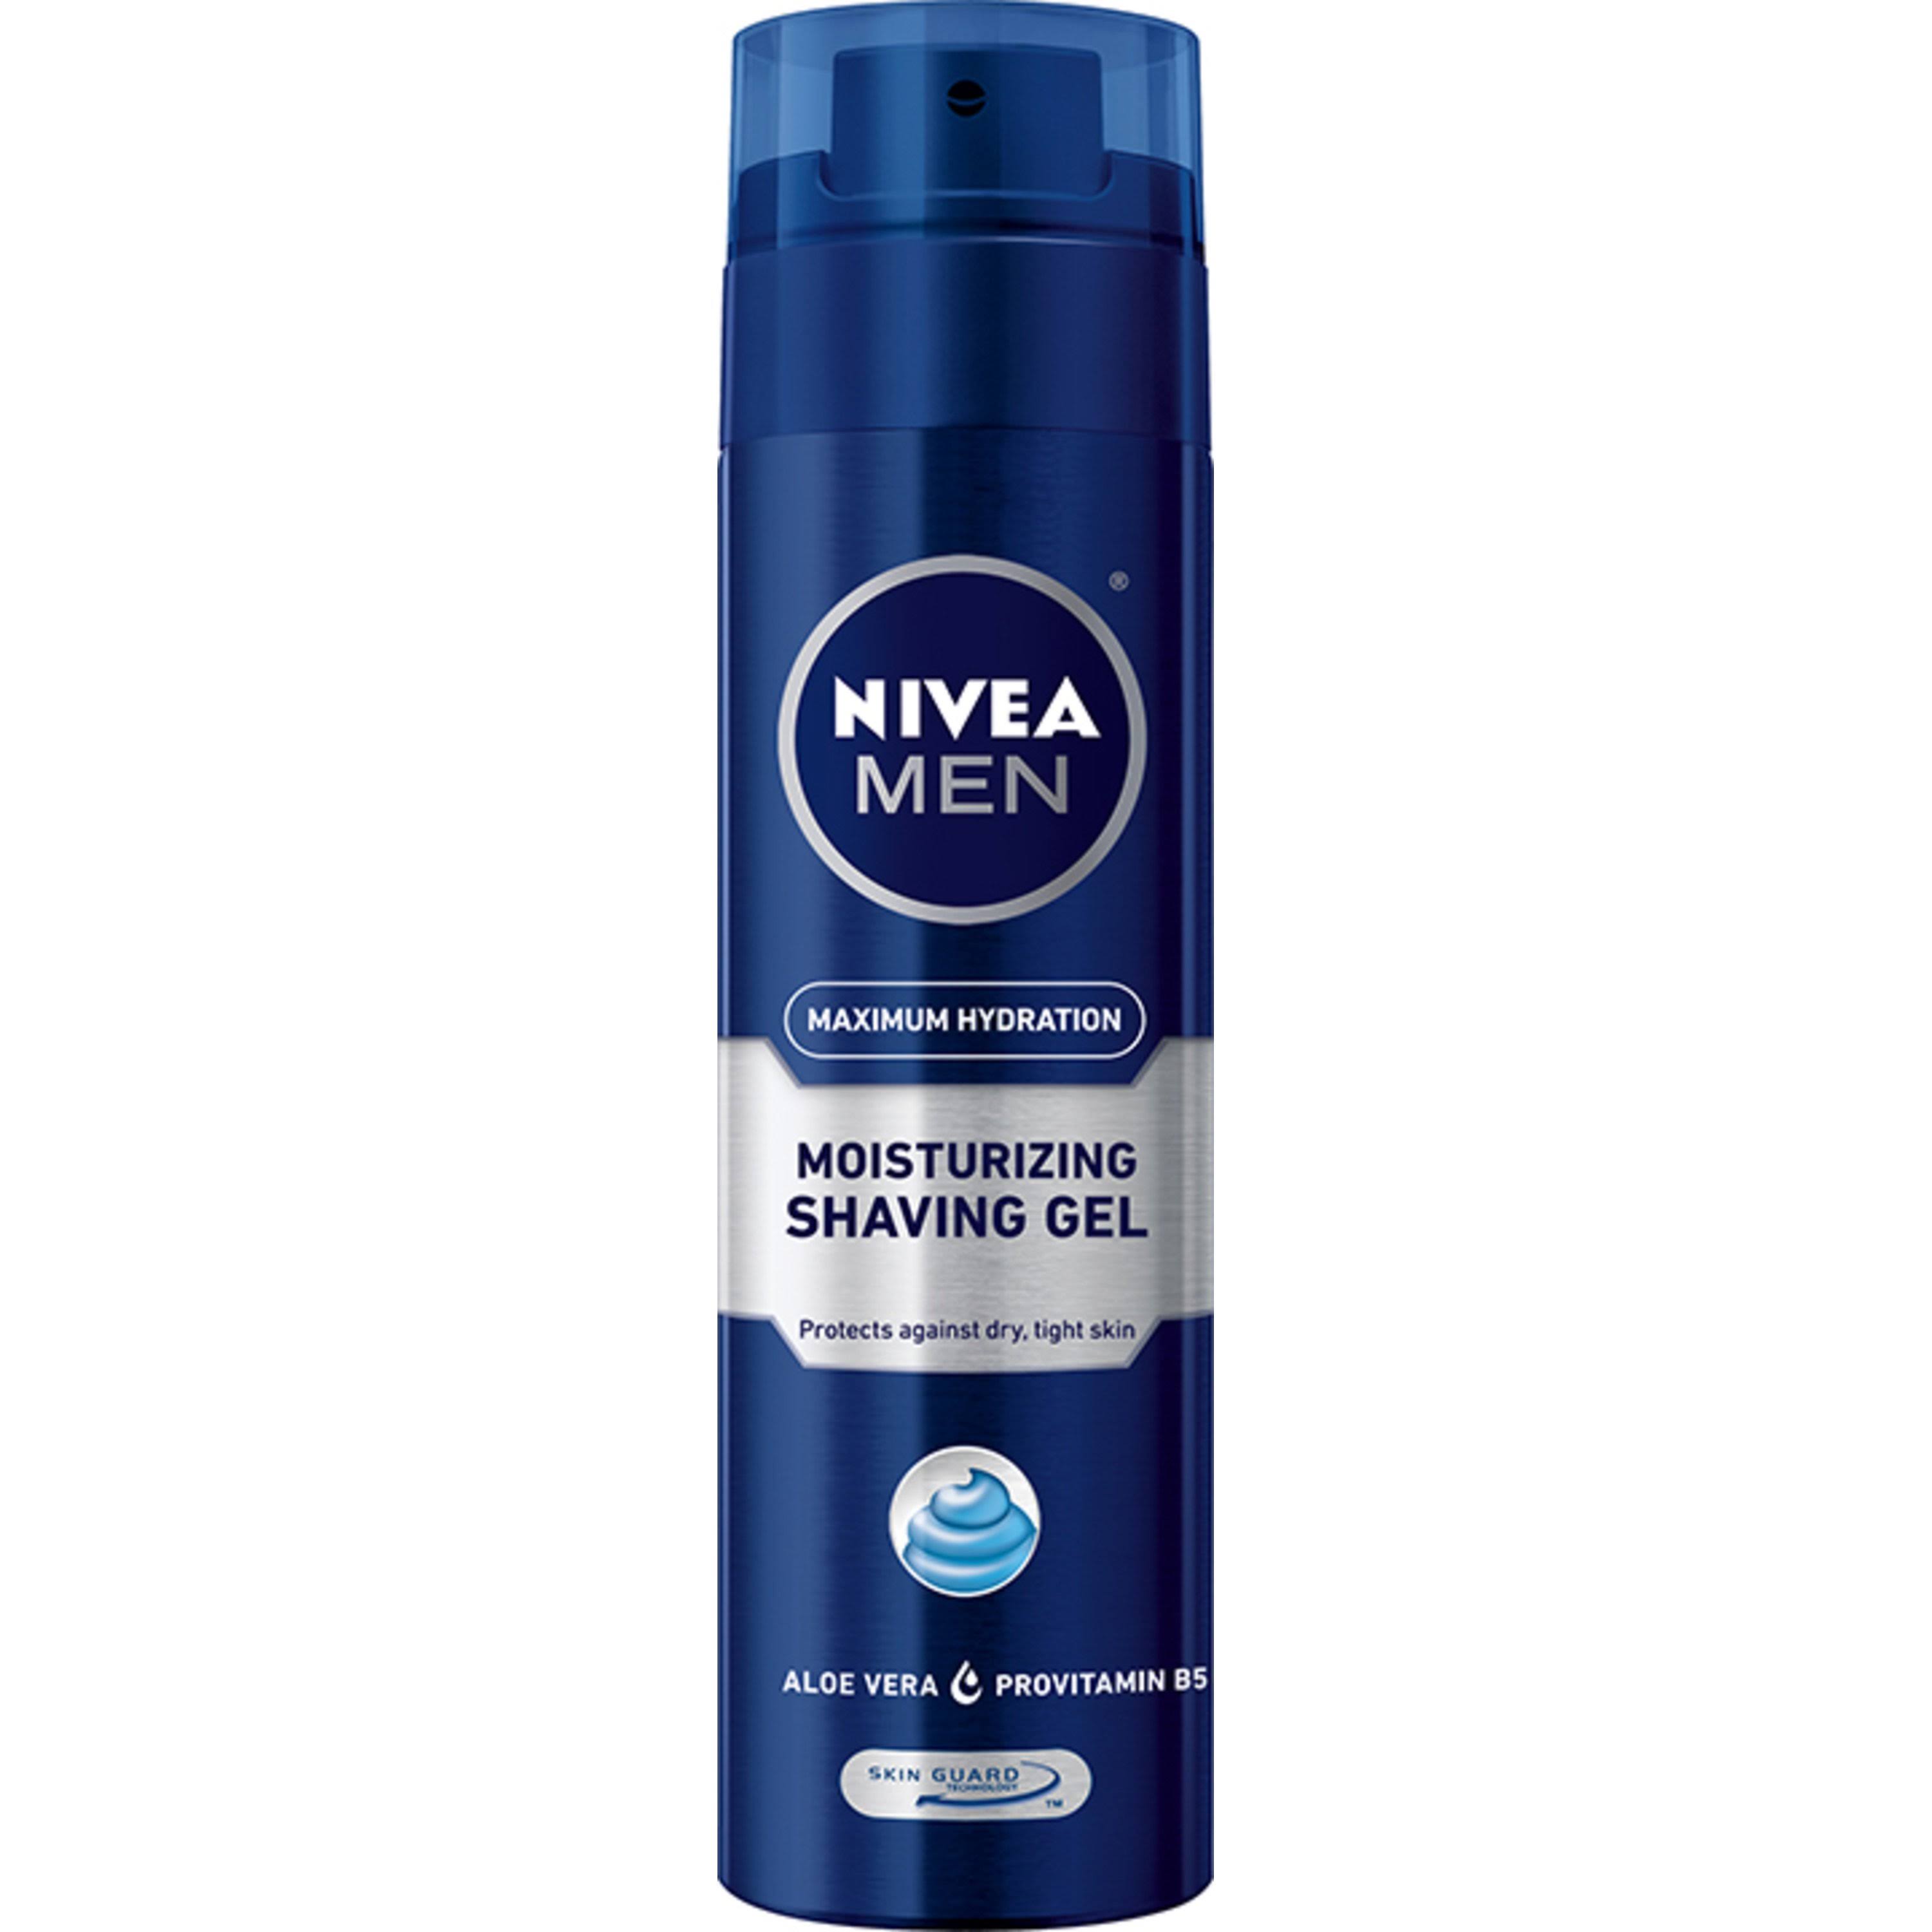 Nivea Men Original Moisturizing Shaving Gel - 7oz